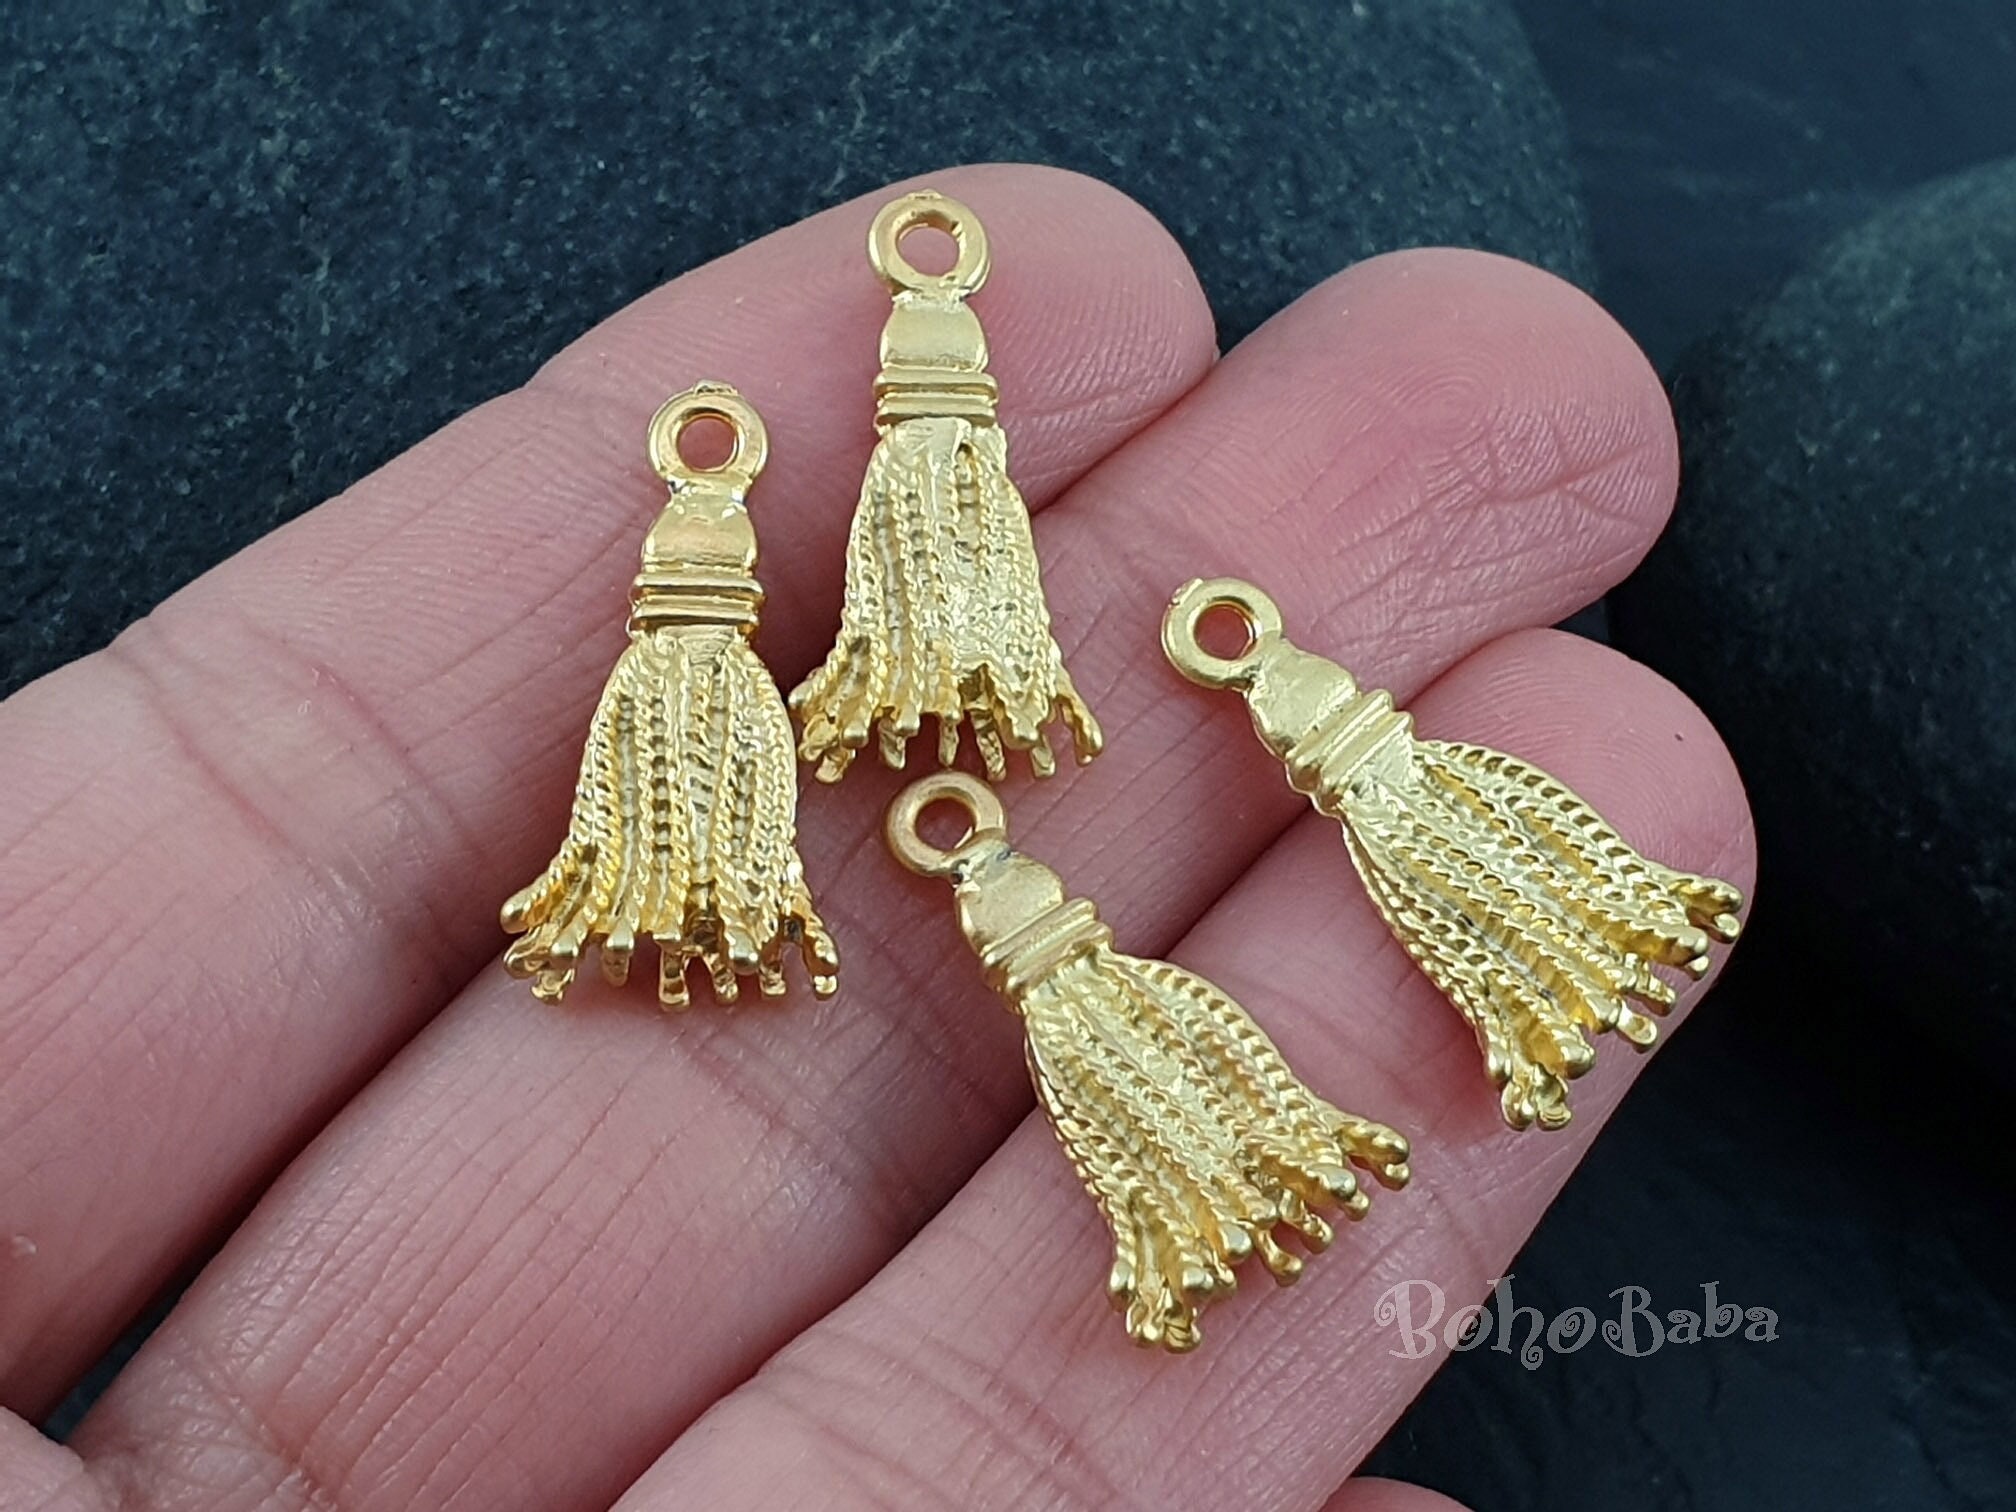 500 pcs/lot mini tassels silk tassel earrings accessories charms pendant  for handmade jewelry findings backpack garment accessor